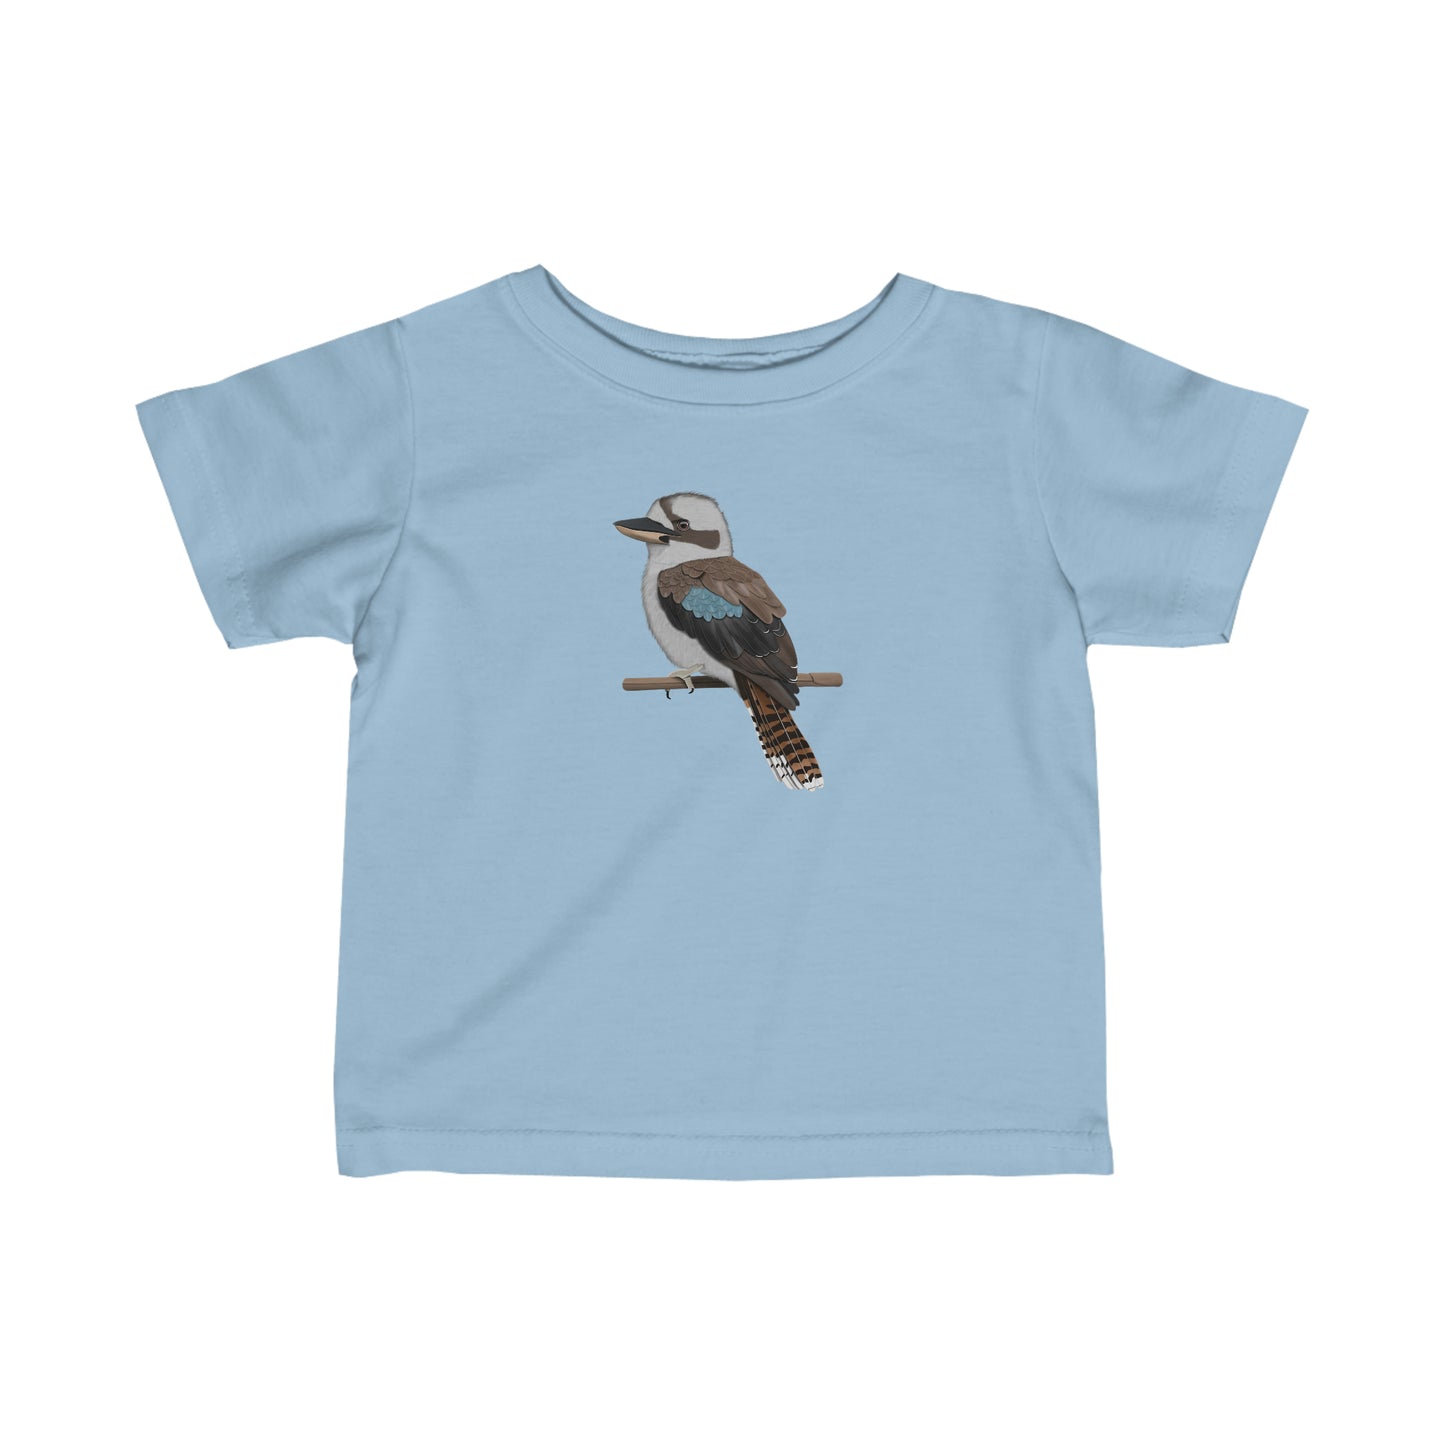 kookaburra bird toddler t-shirt